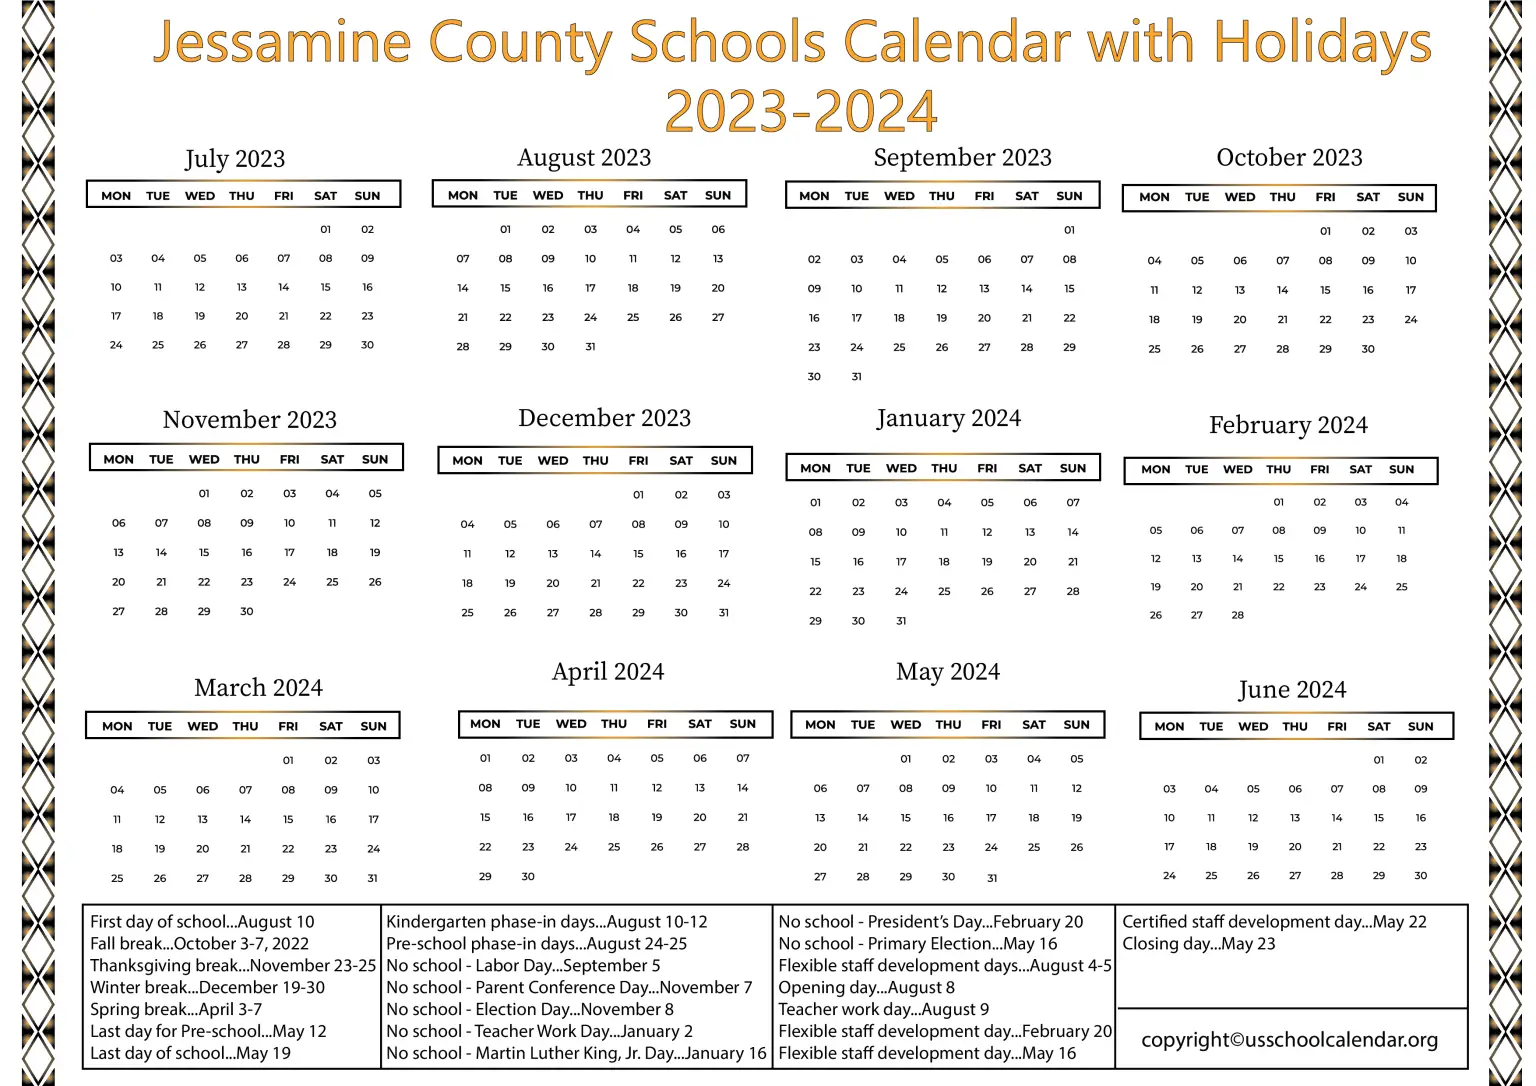 jessamine-county-schools-calendar-with-holidays-2023-2024